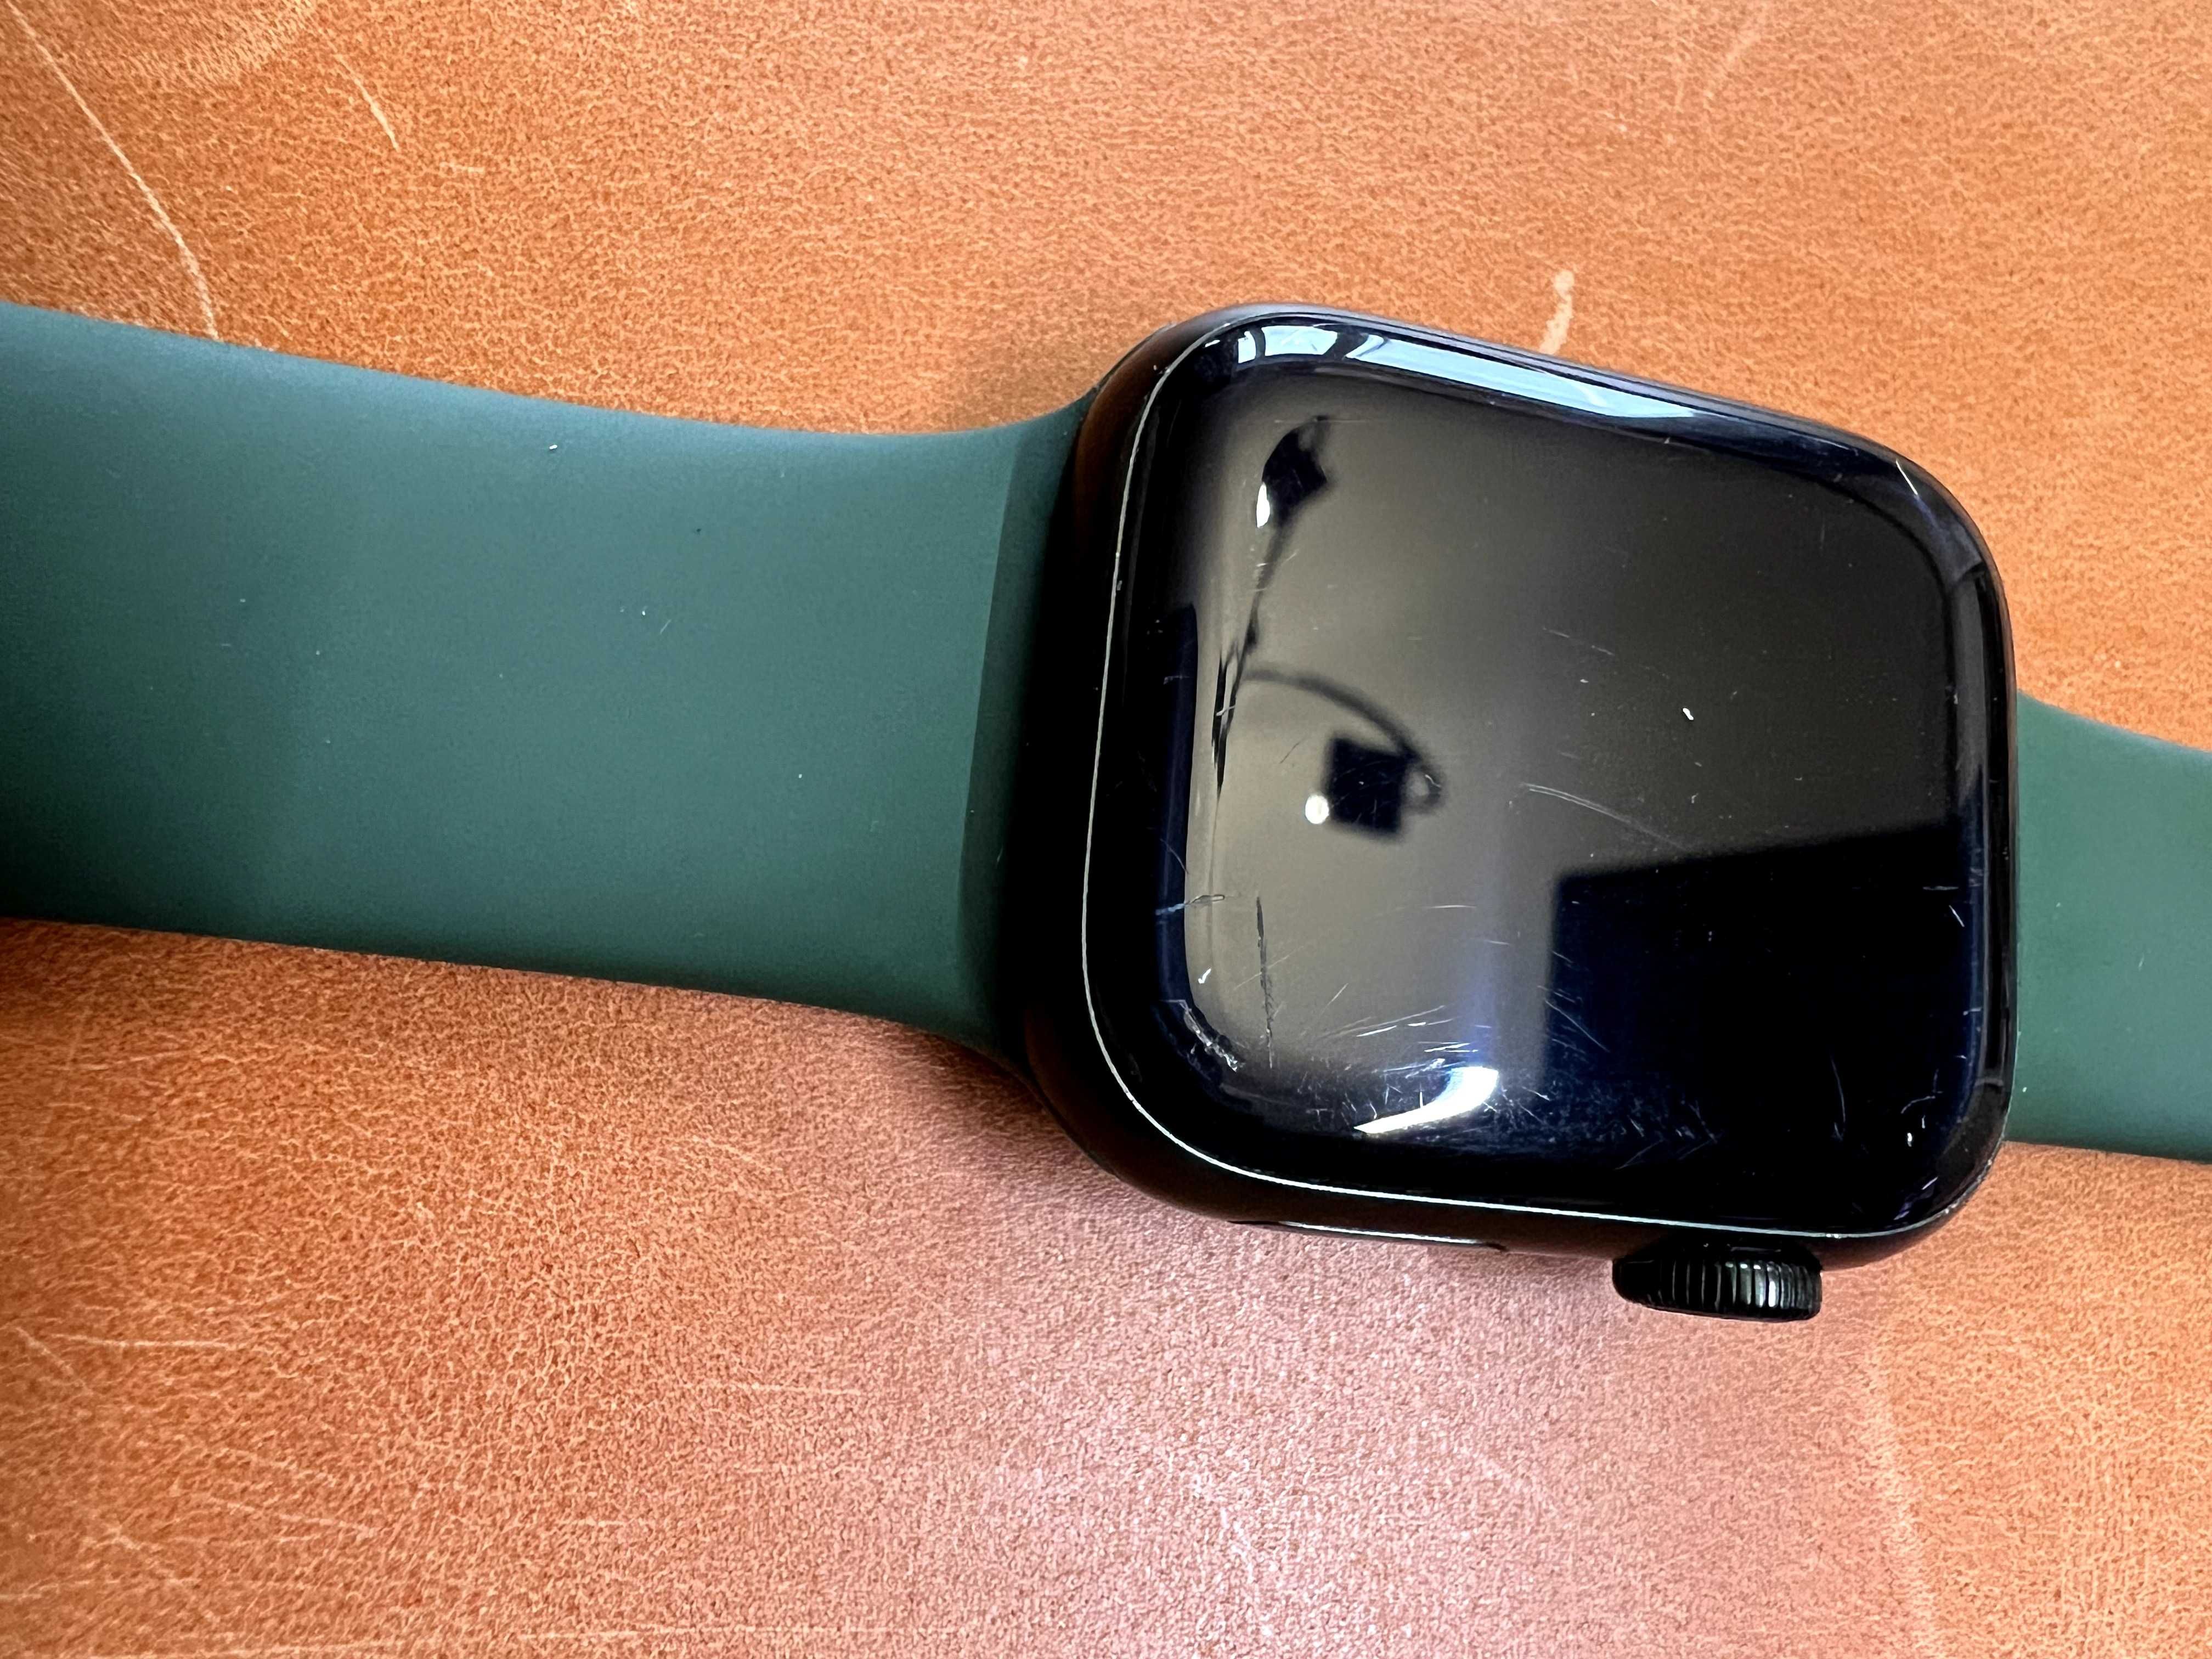 Apple Watch Series 7 41 mm Green